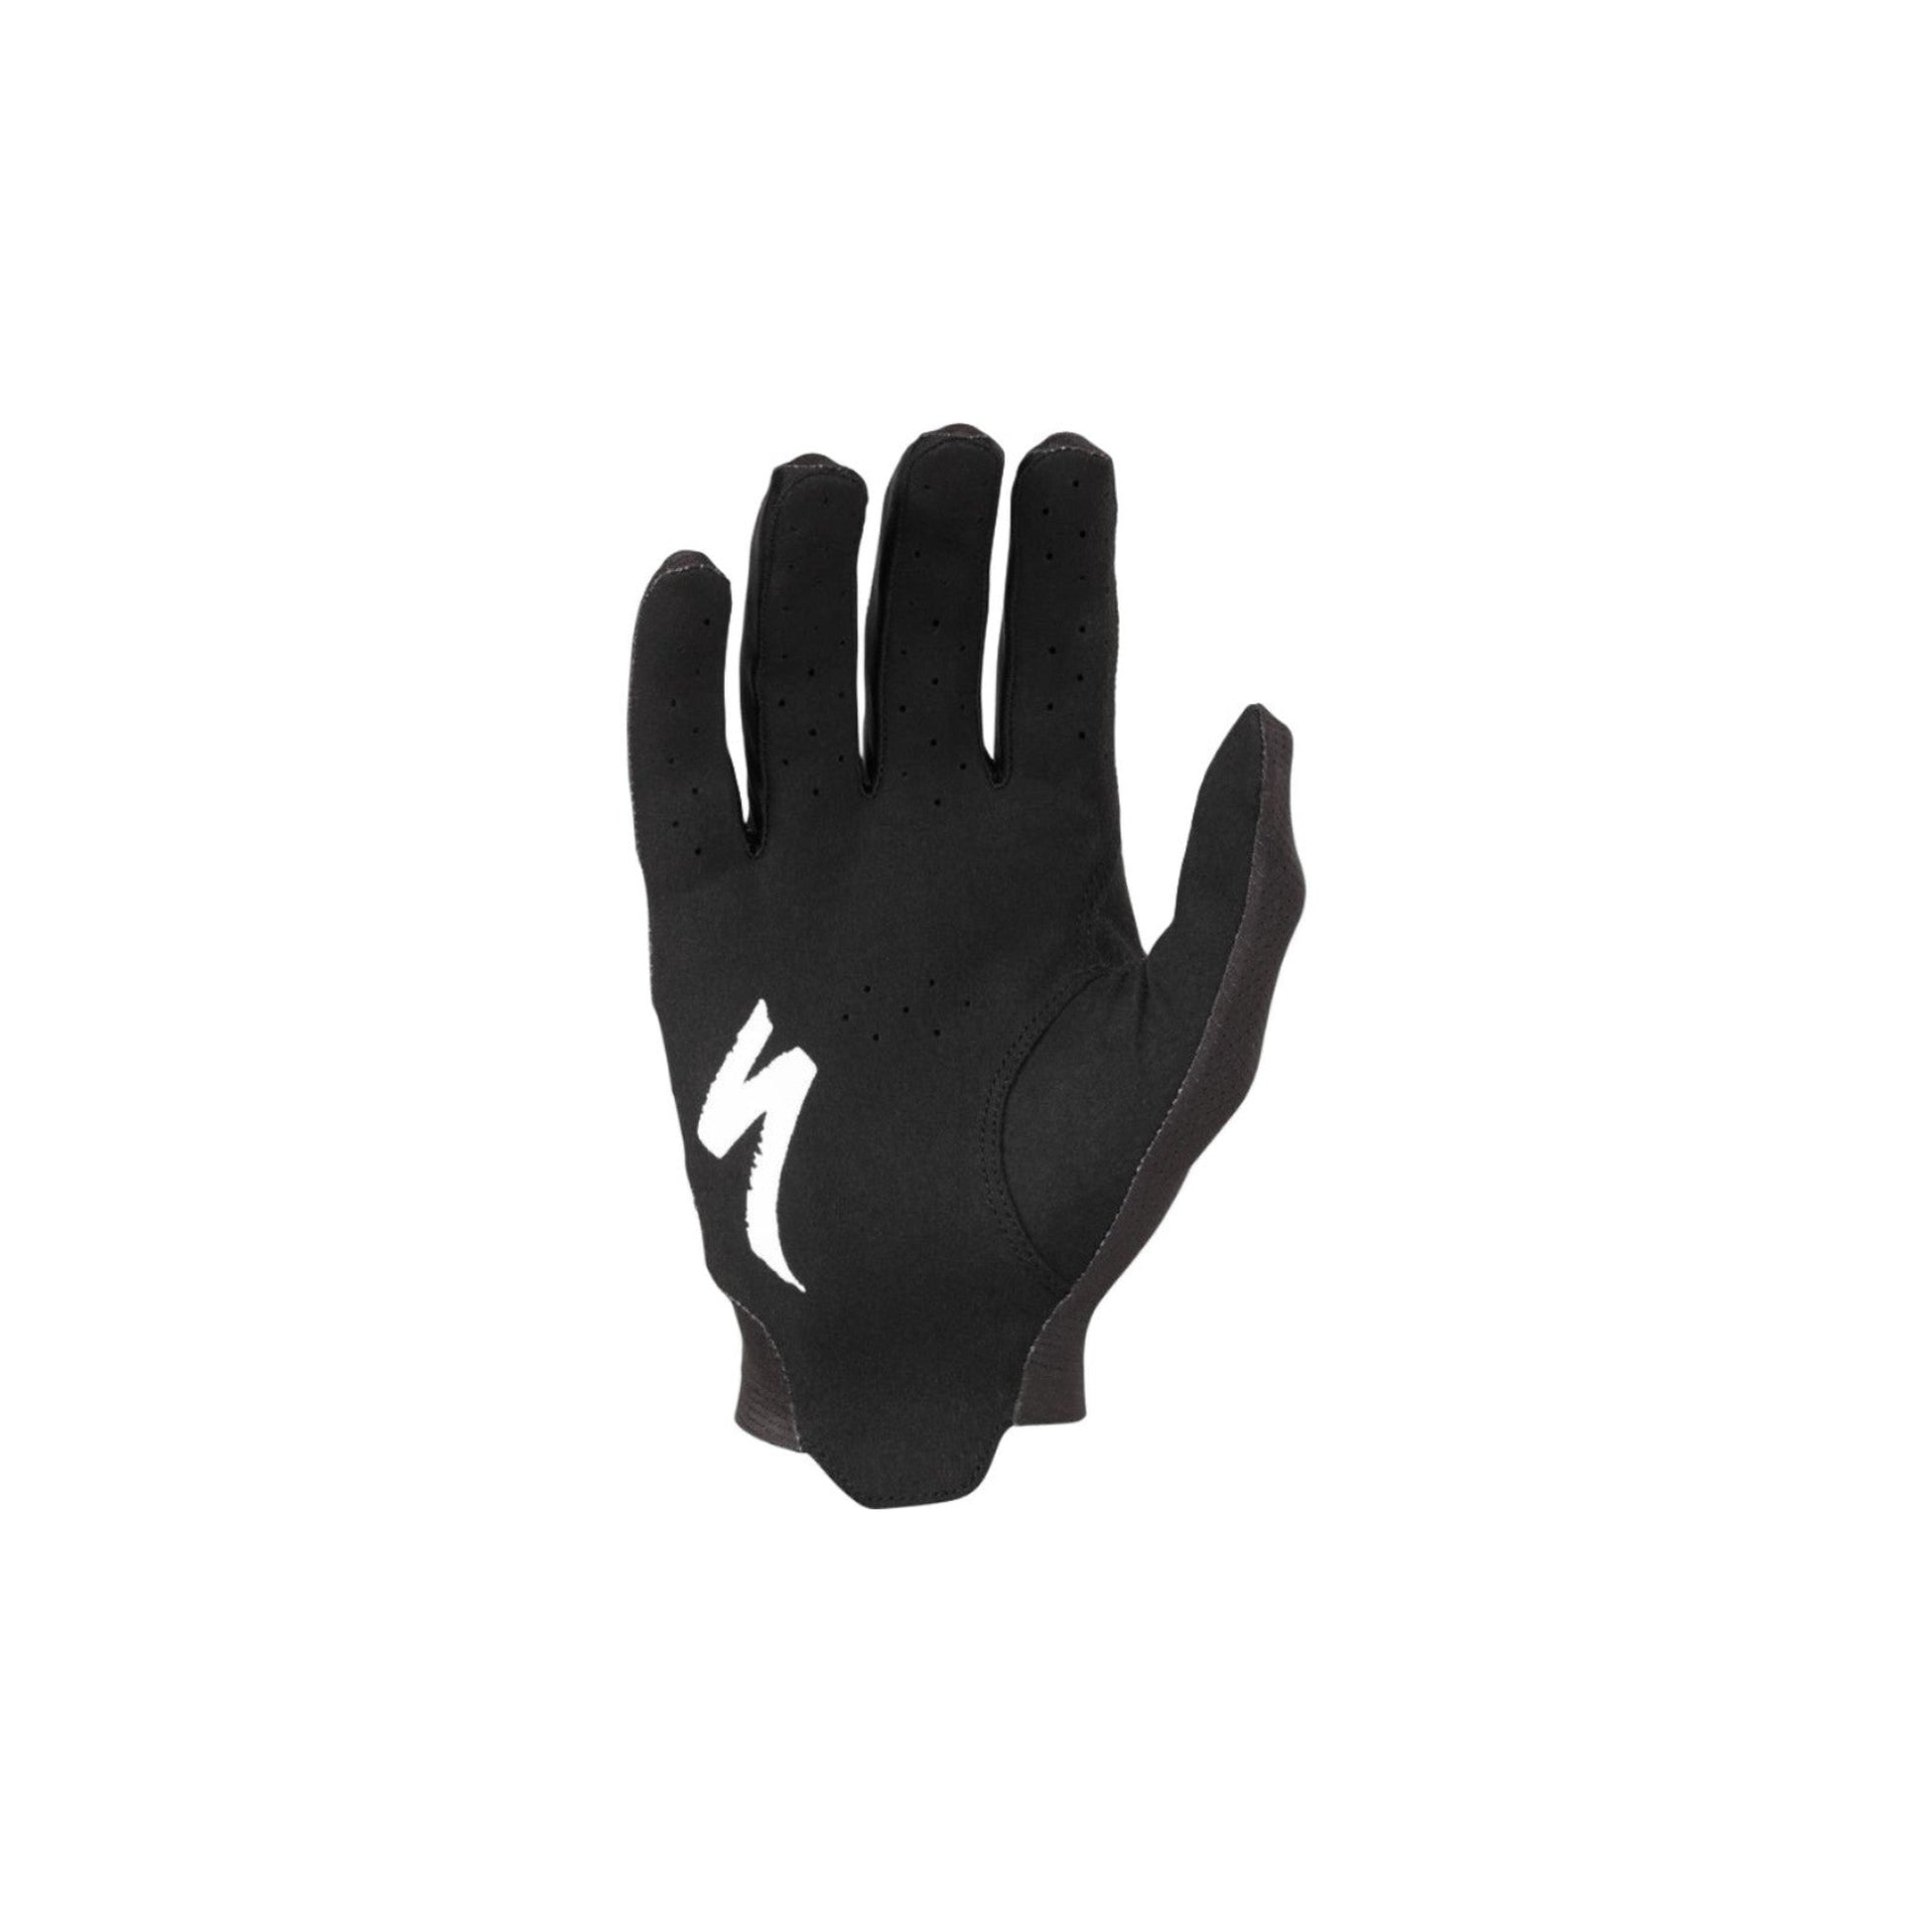 SL Pro Long Finger Glove | Complete Cyclist - 